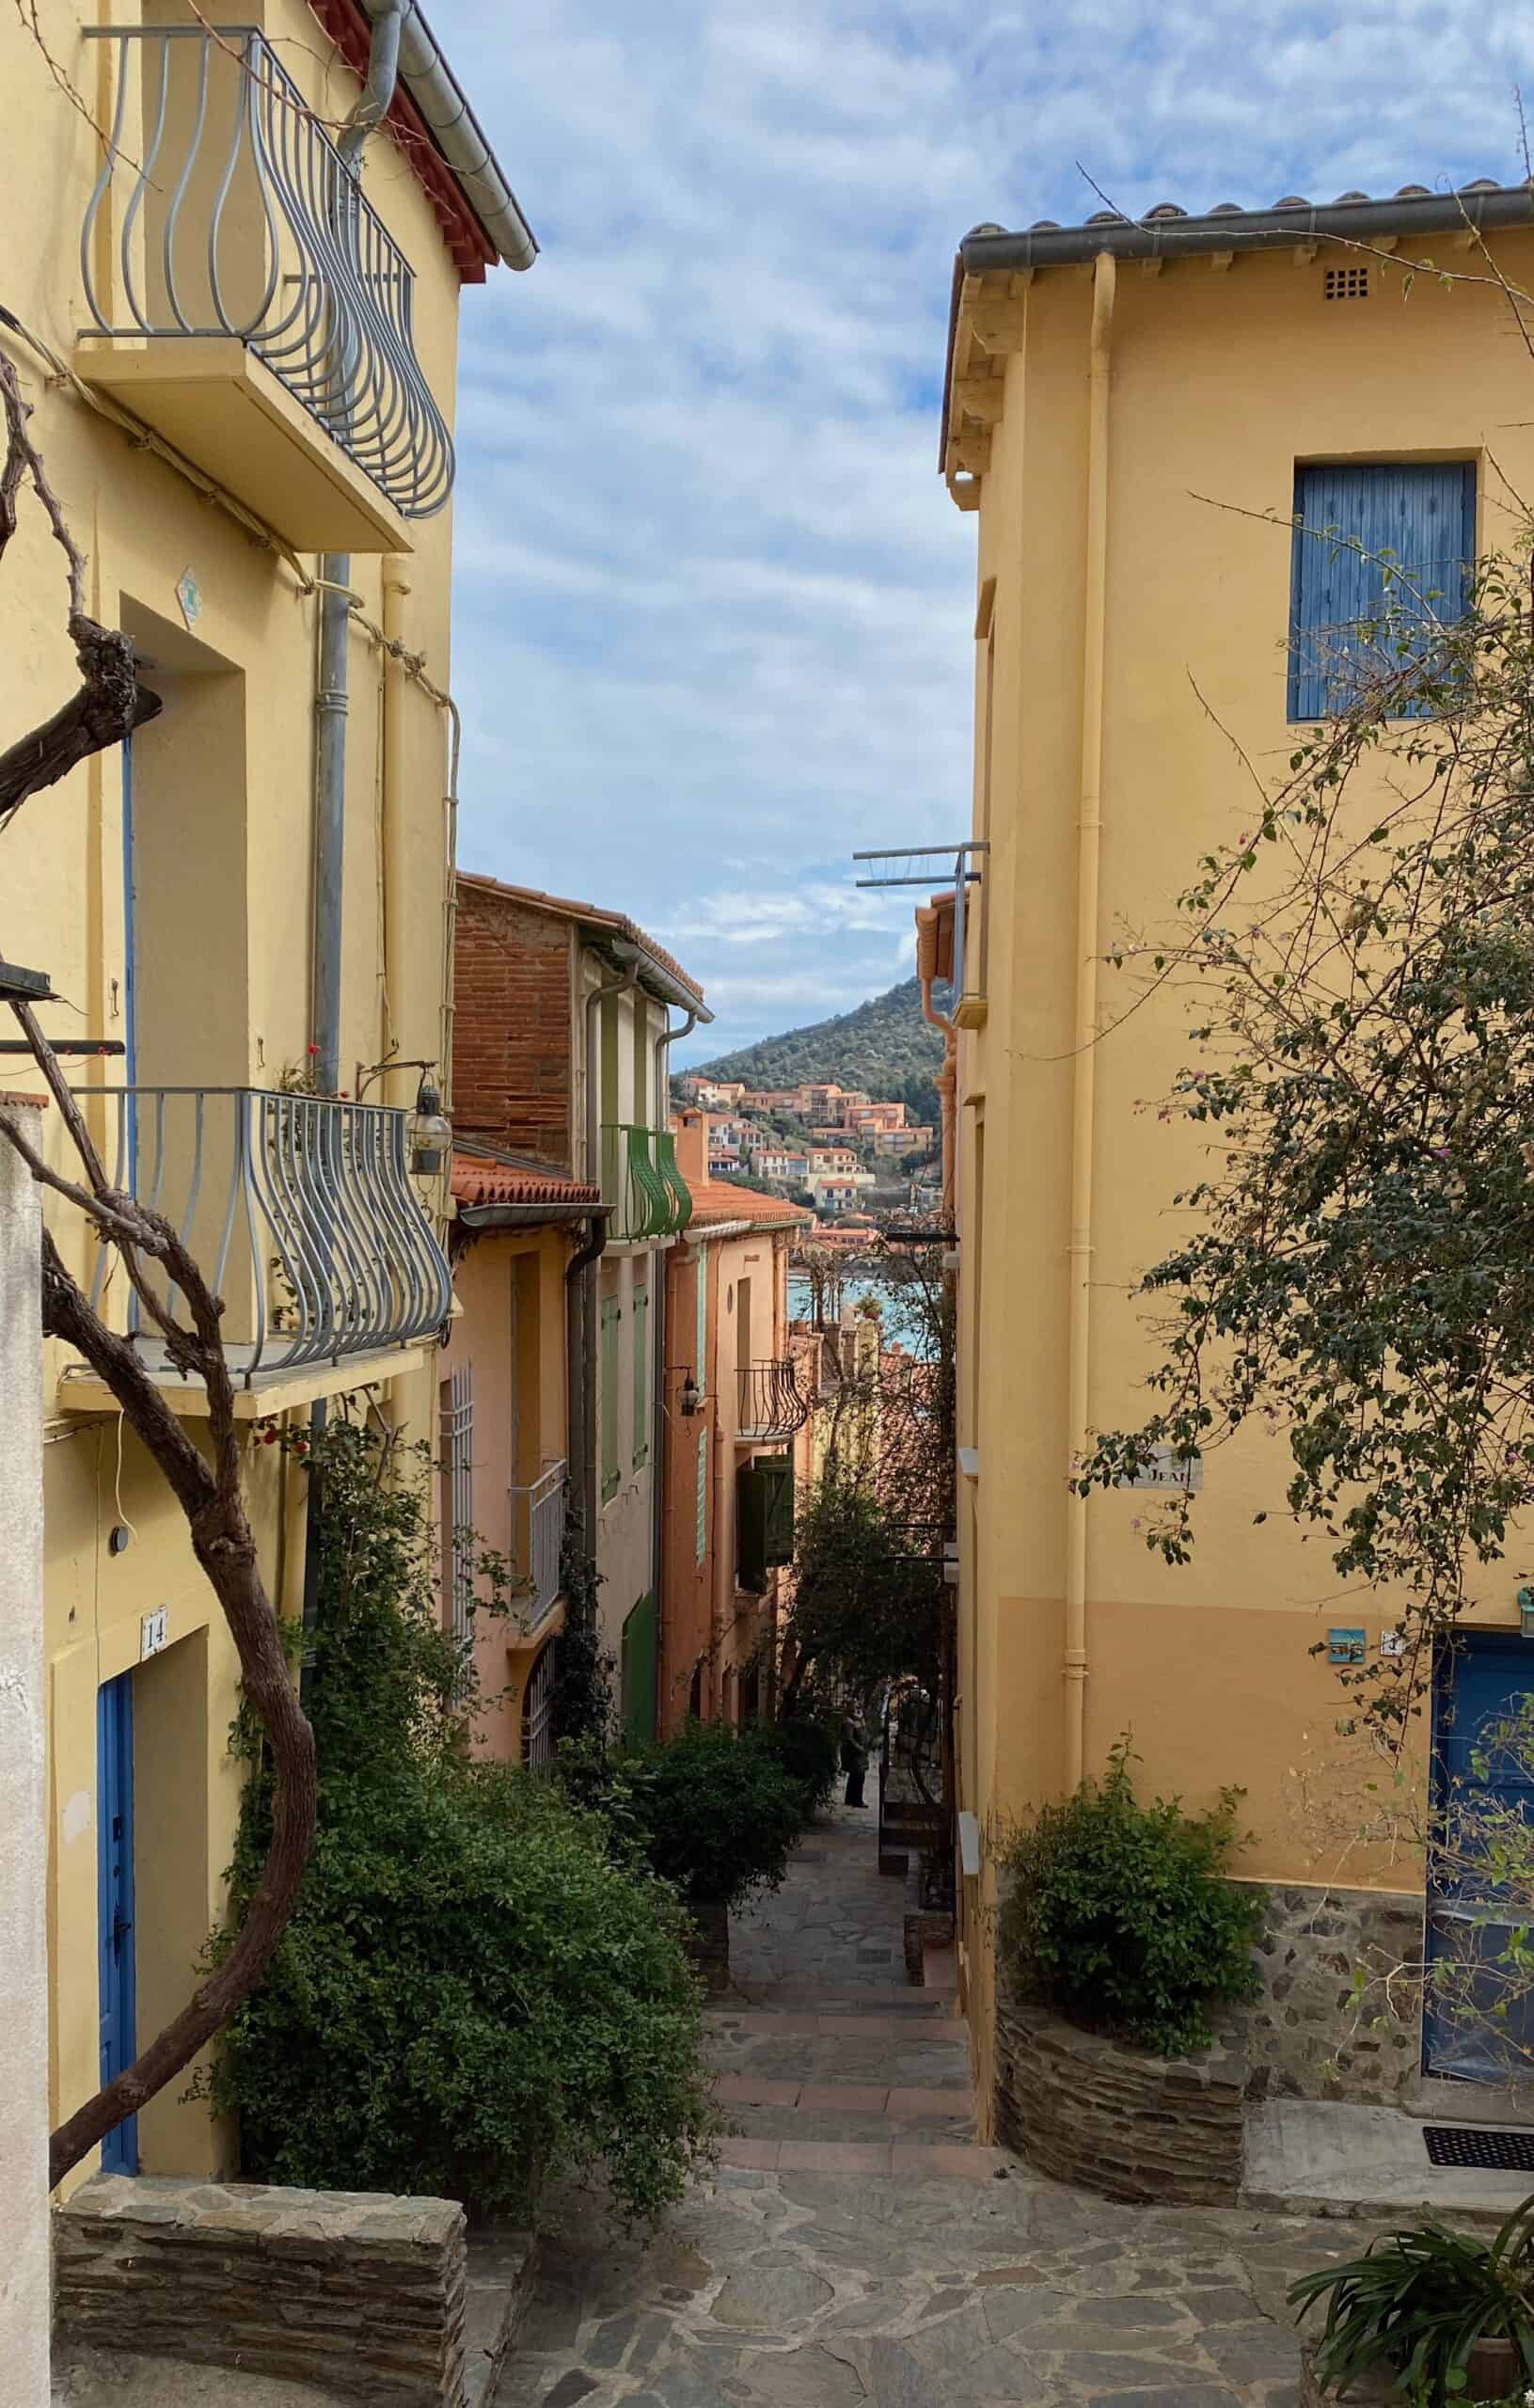 The quaint streets of Collioure